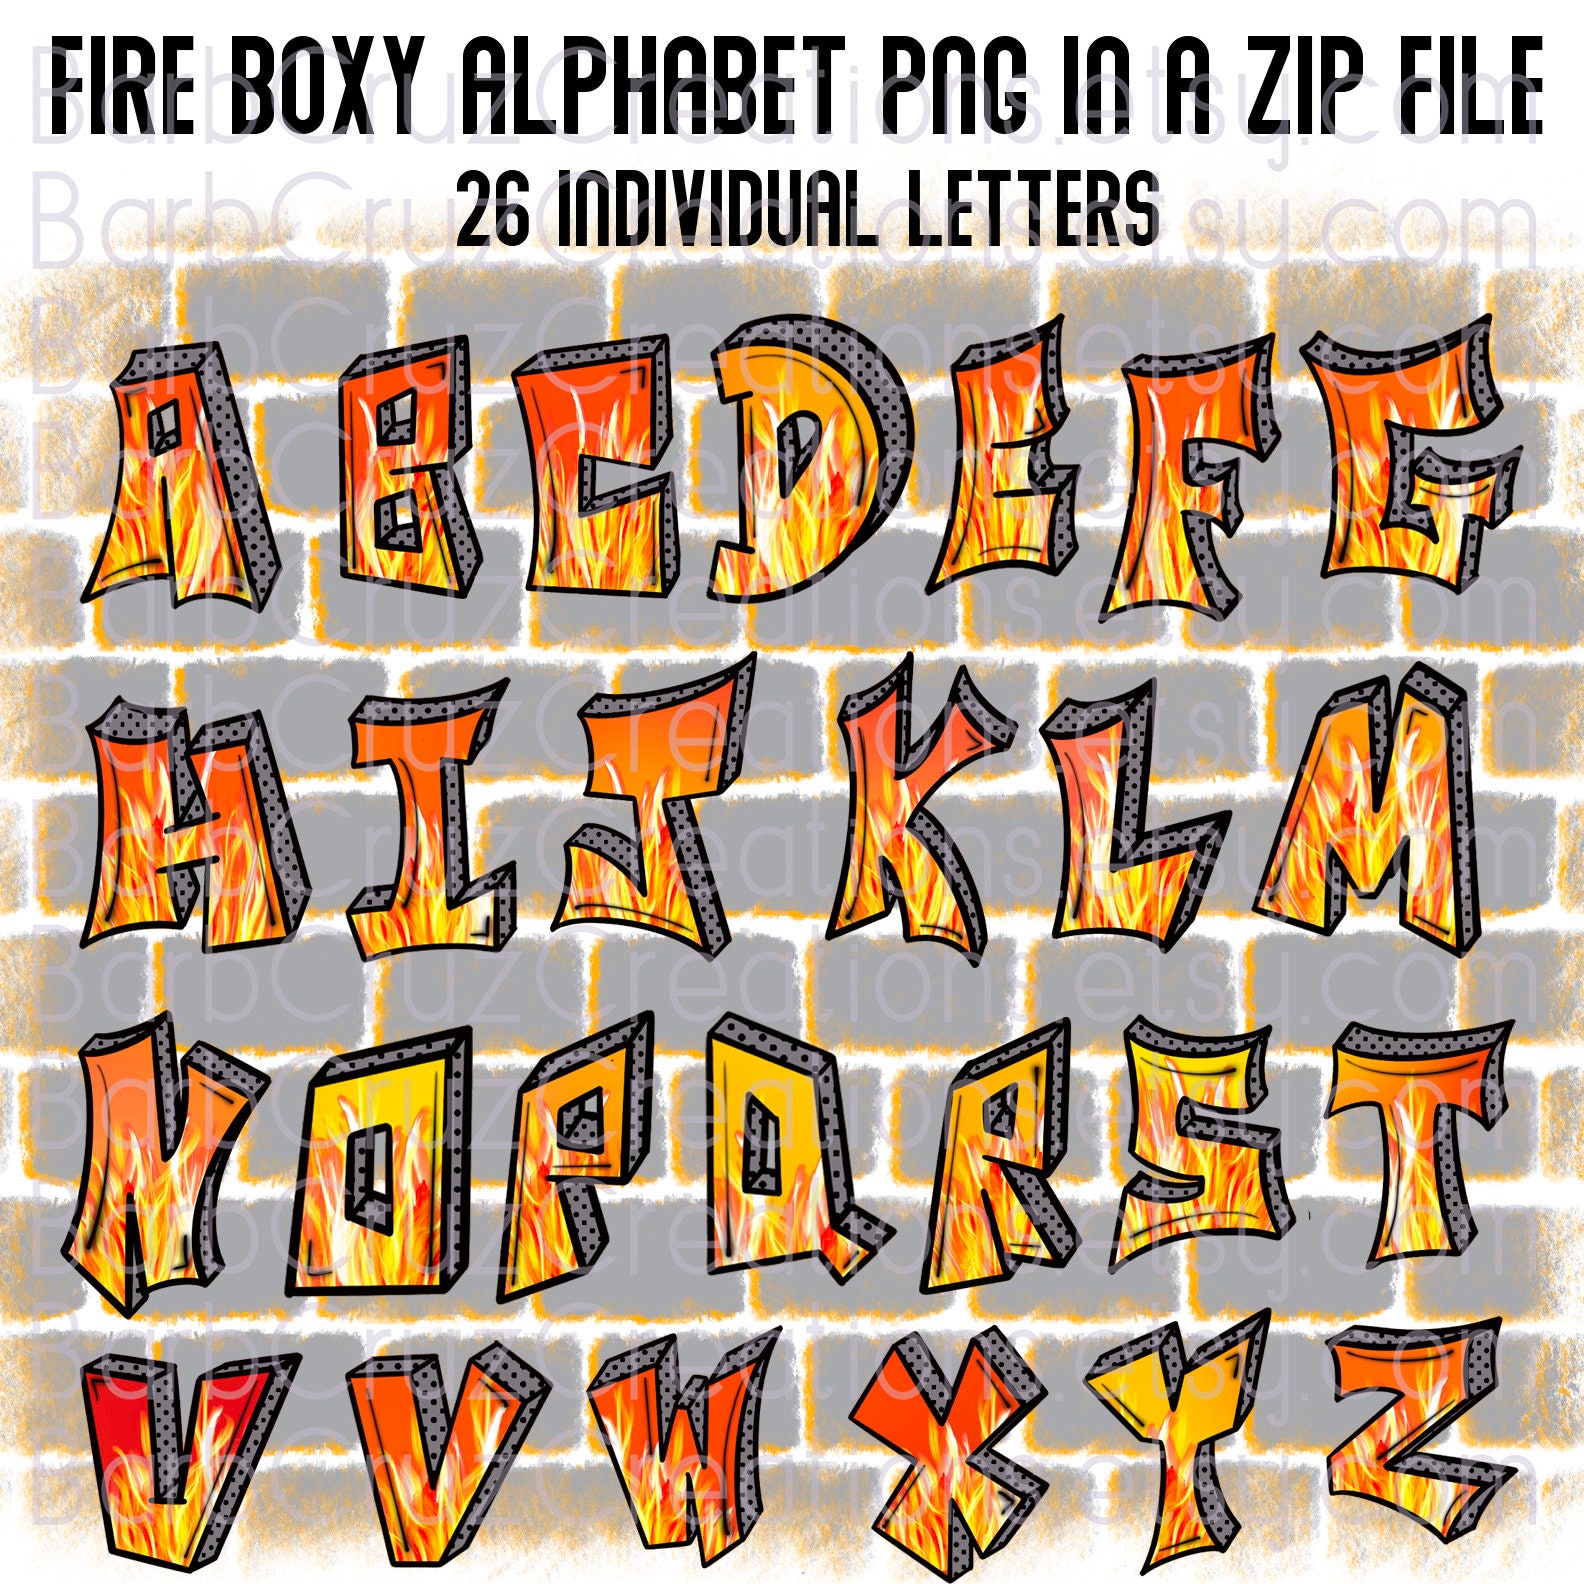 graffiti letters alphabet fonts